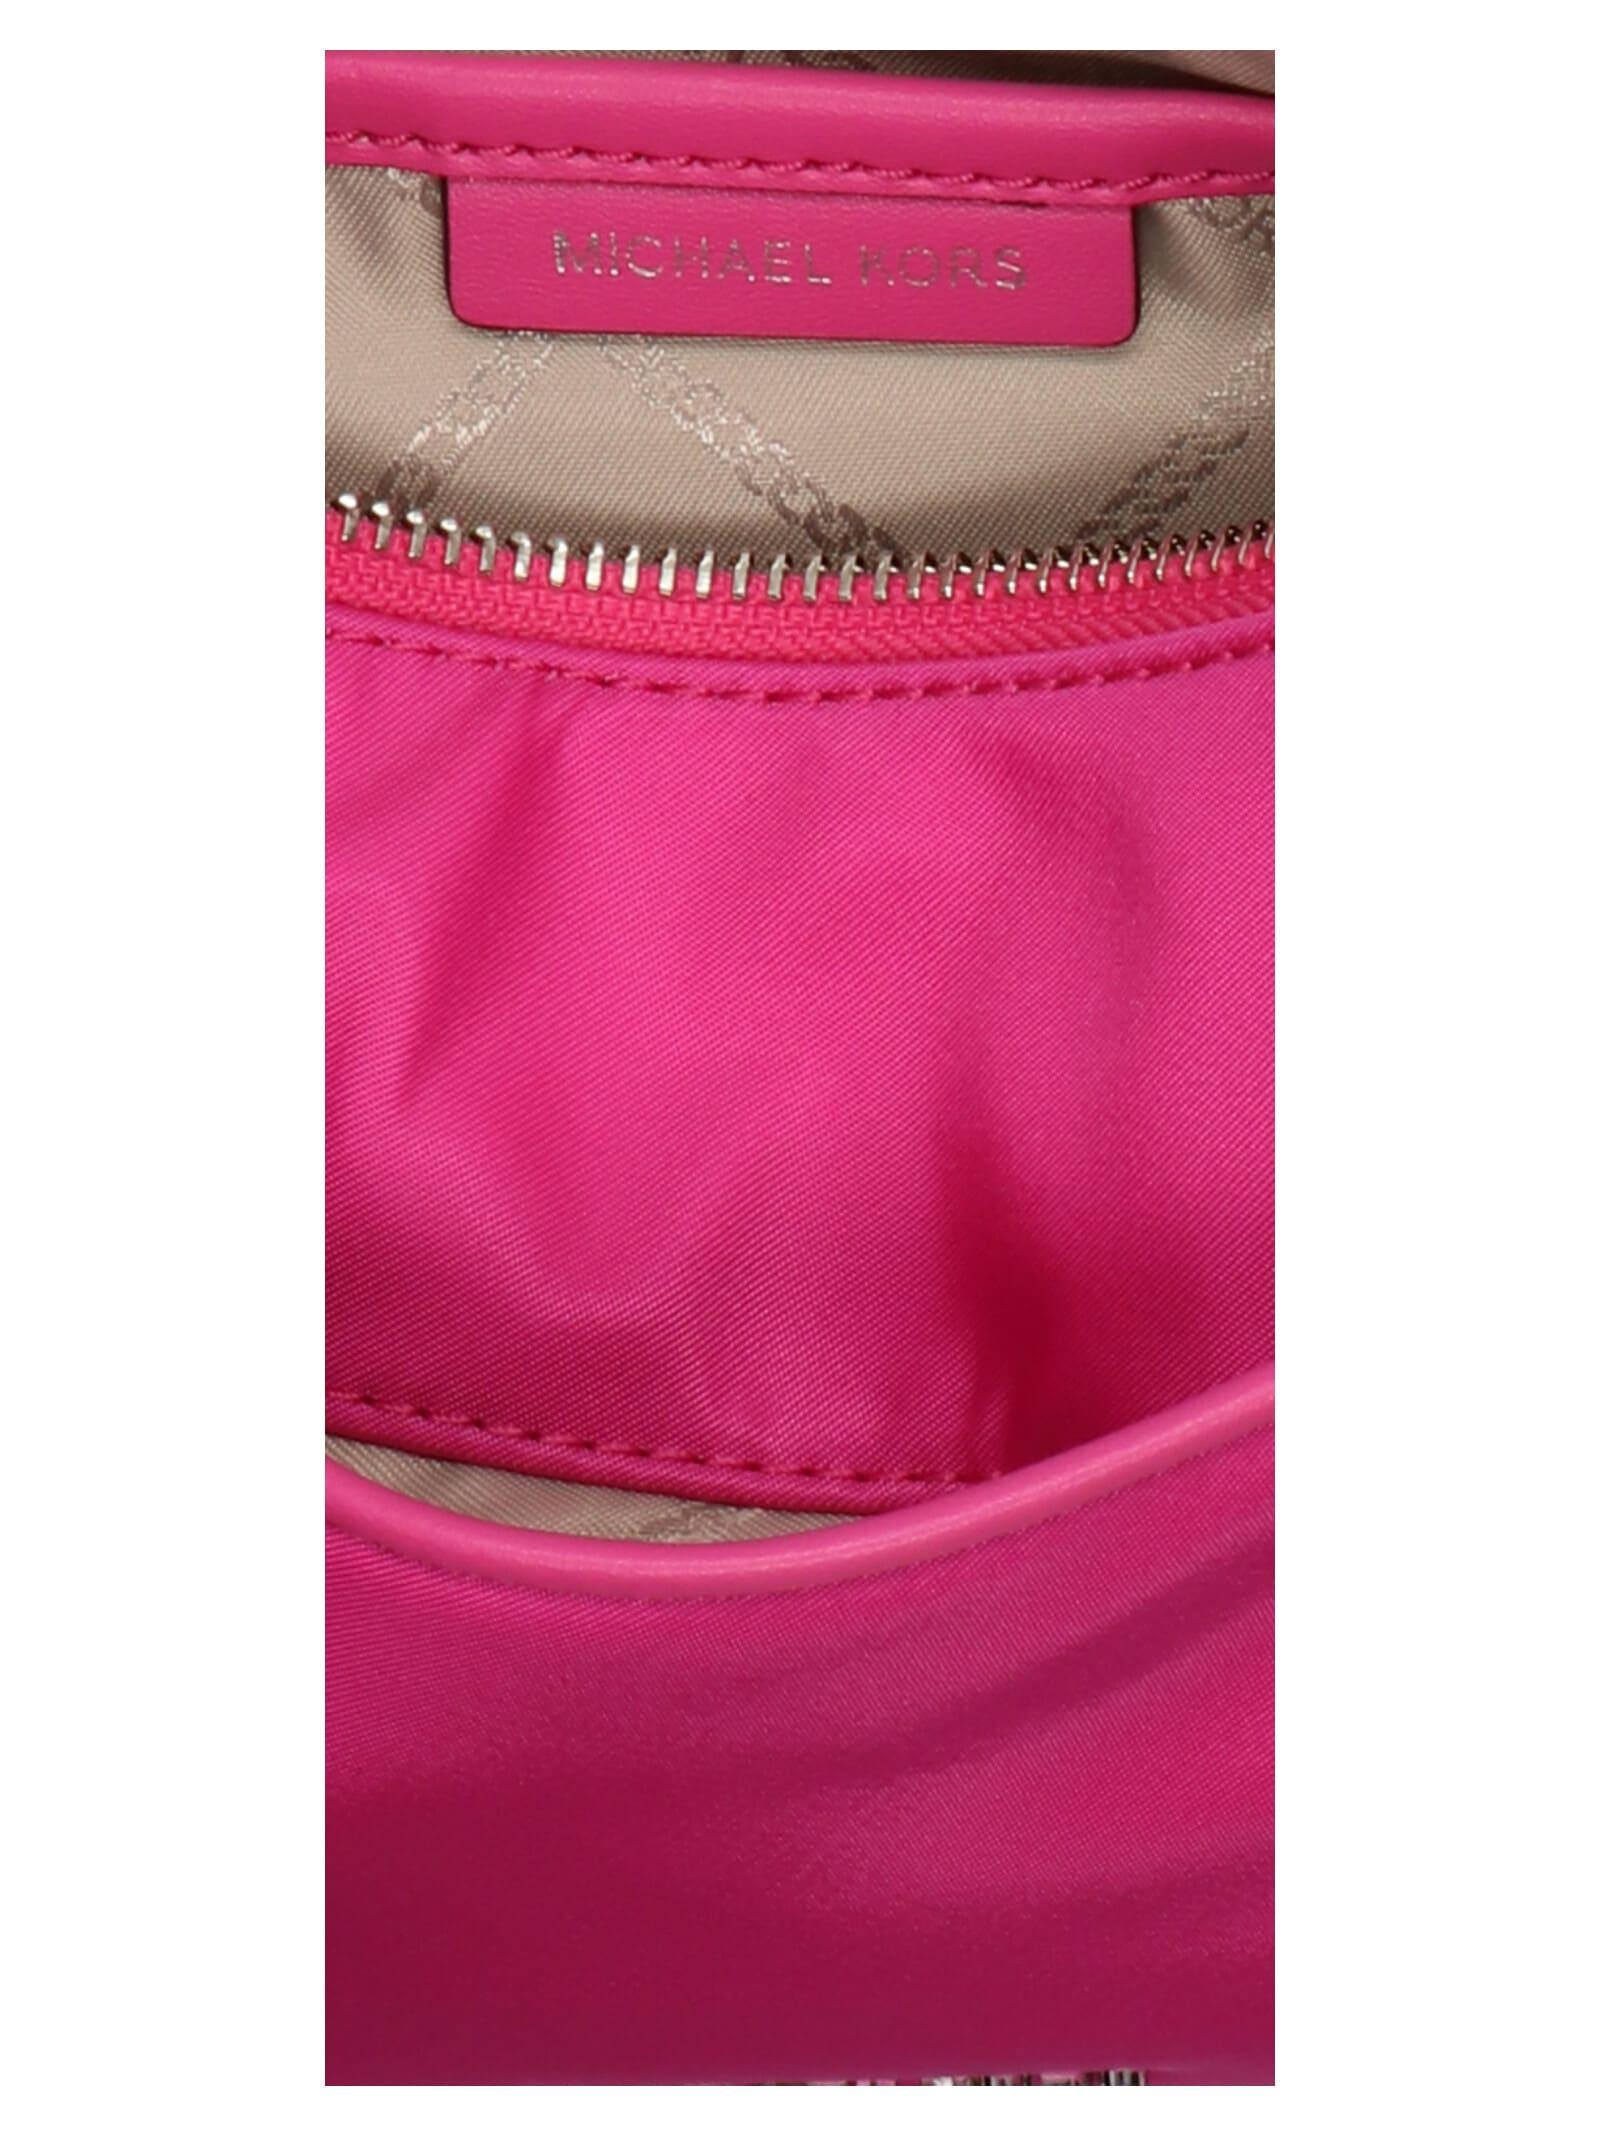 Michael Kors Light Pink Leather Jet Set Crossbody Bag, Best Price and  Reviews